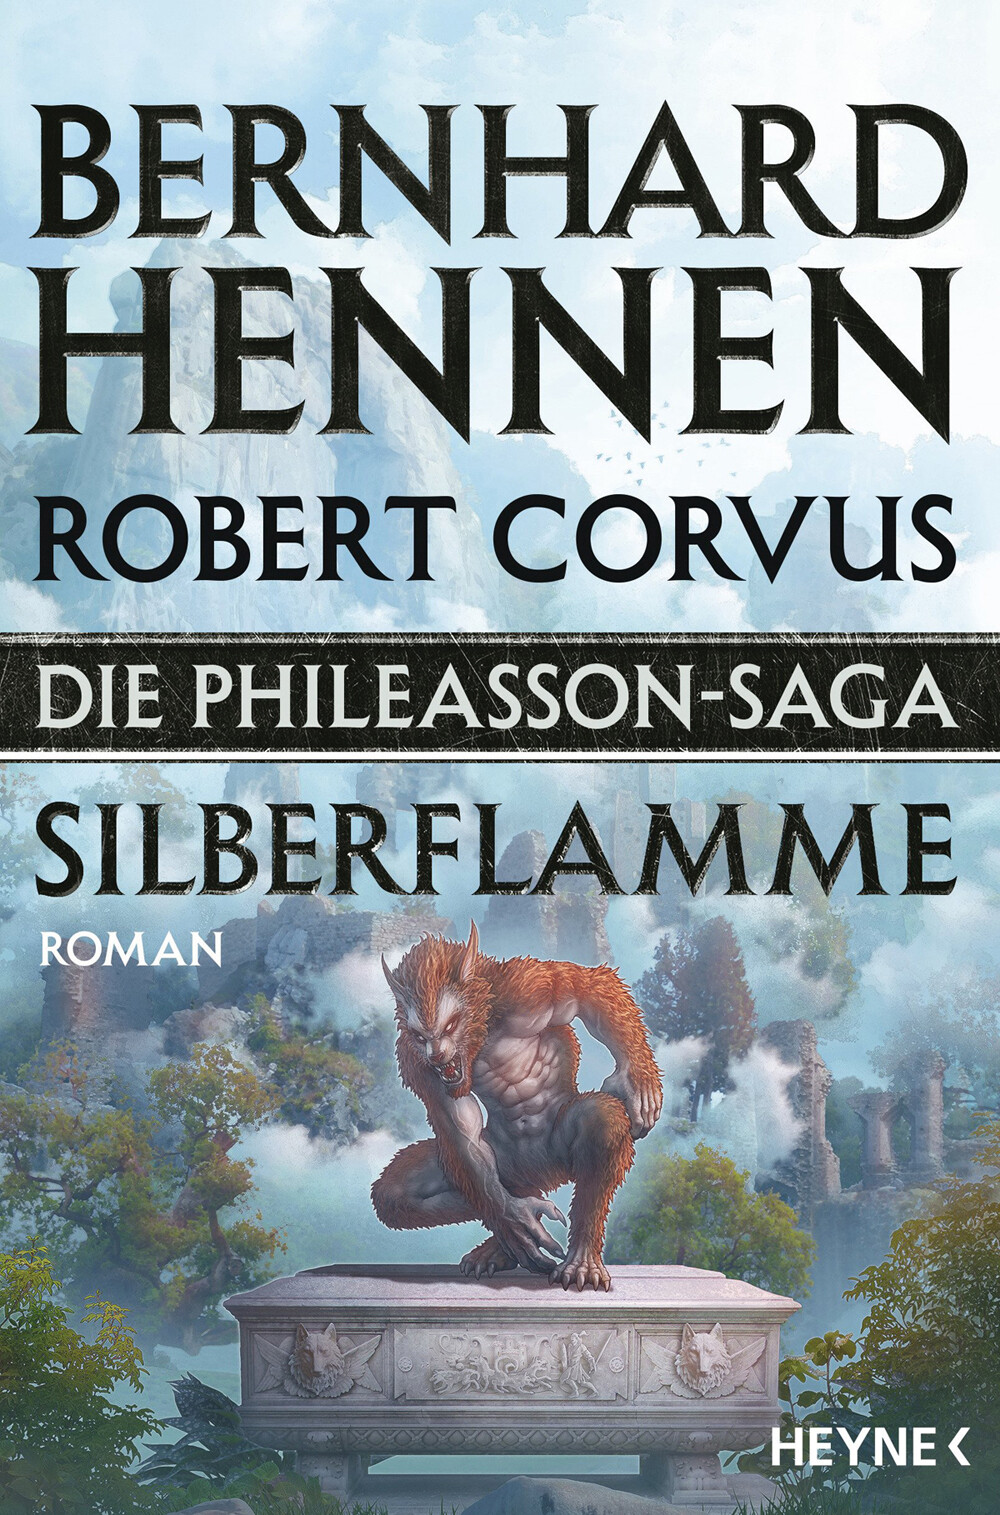 Die Phileasson-Saga Book Four -  Silberflamme Cover Layout